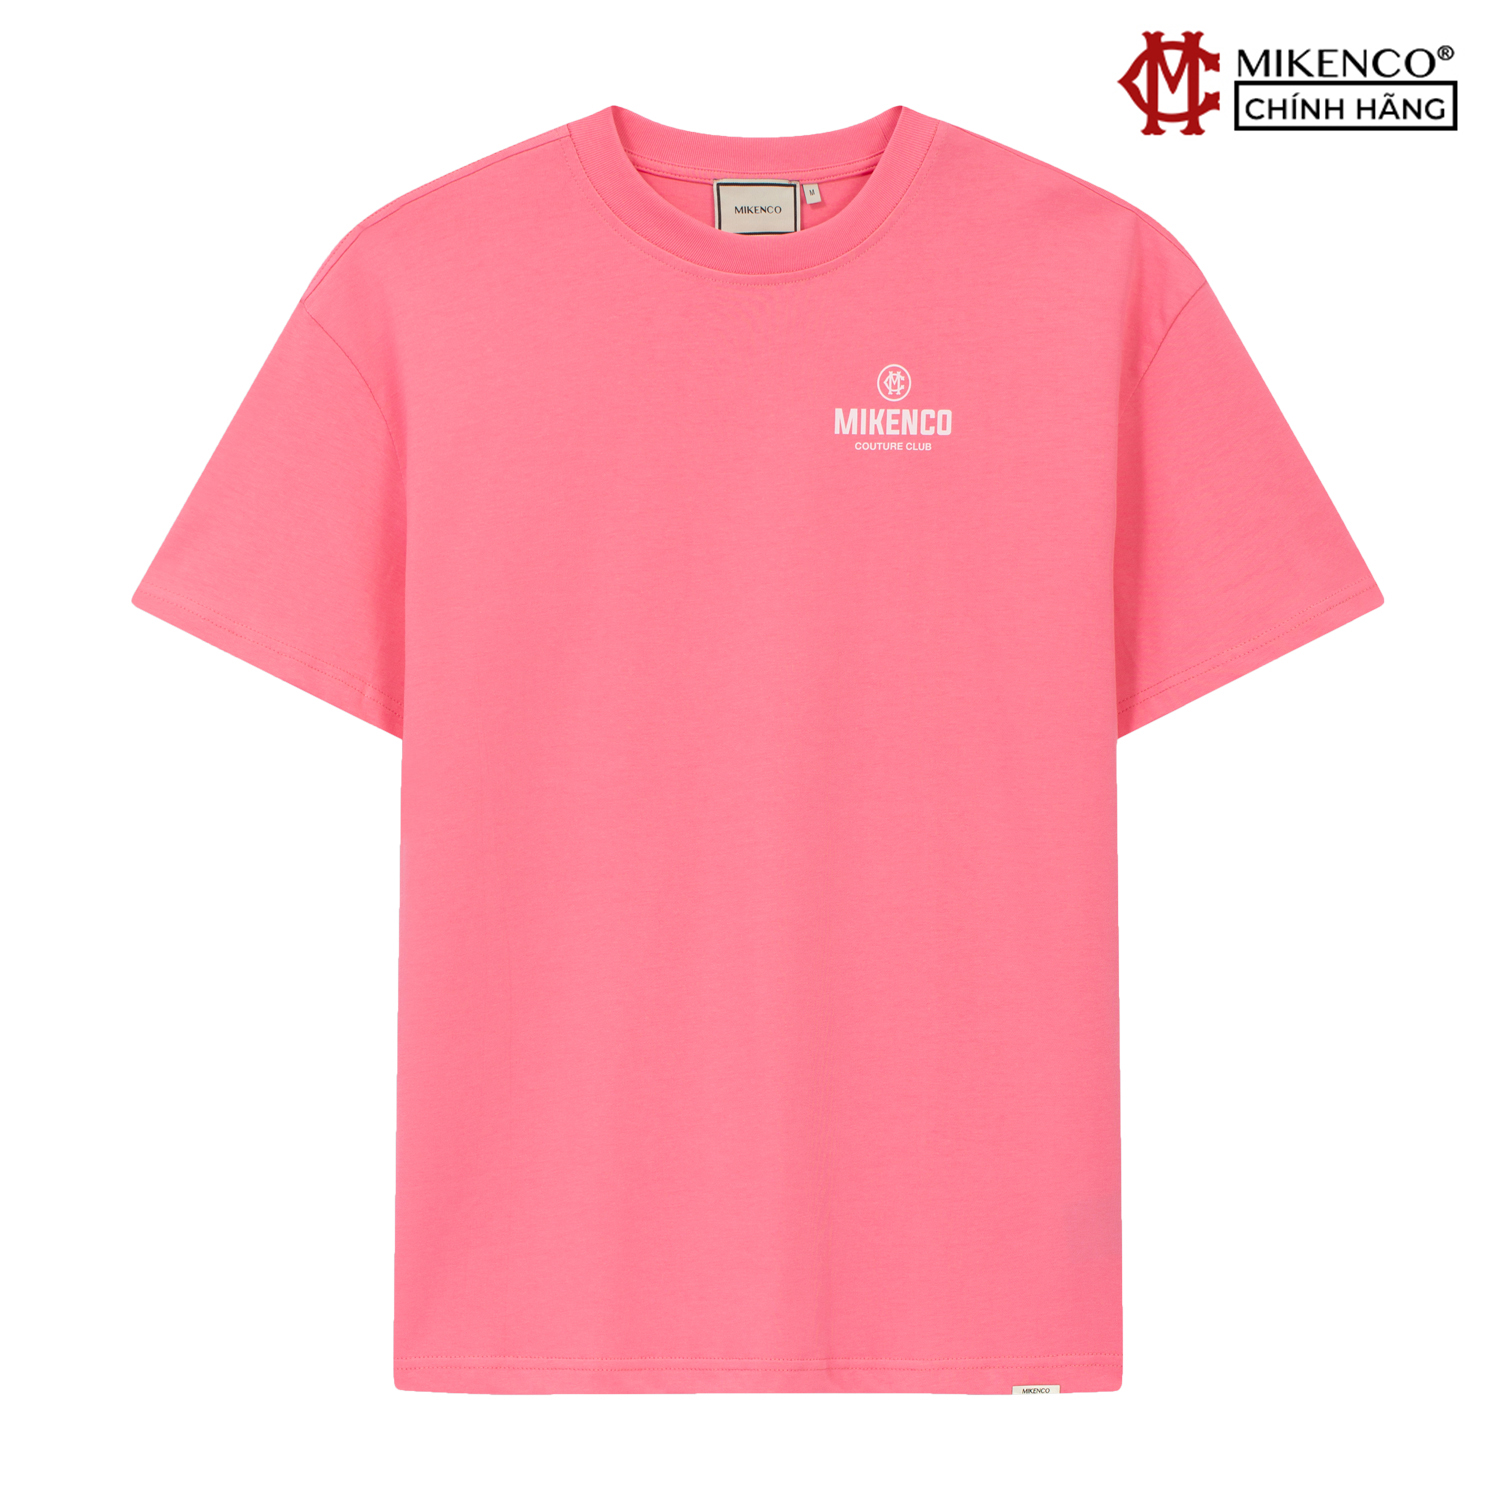 Mikenco couture club tshirt S22 T shirt for men